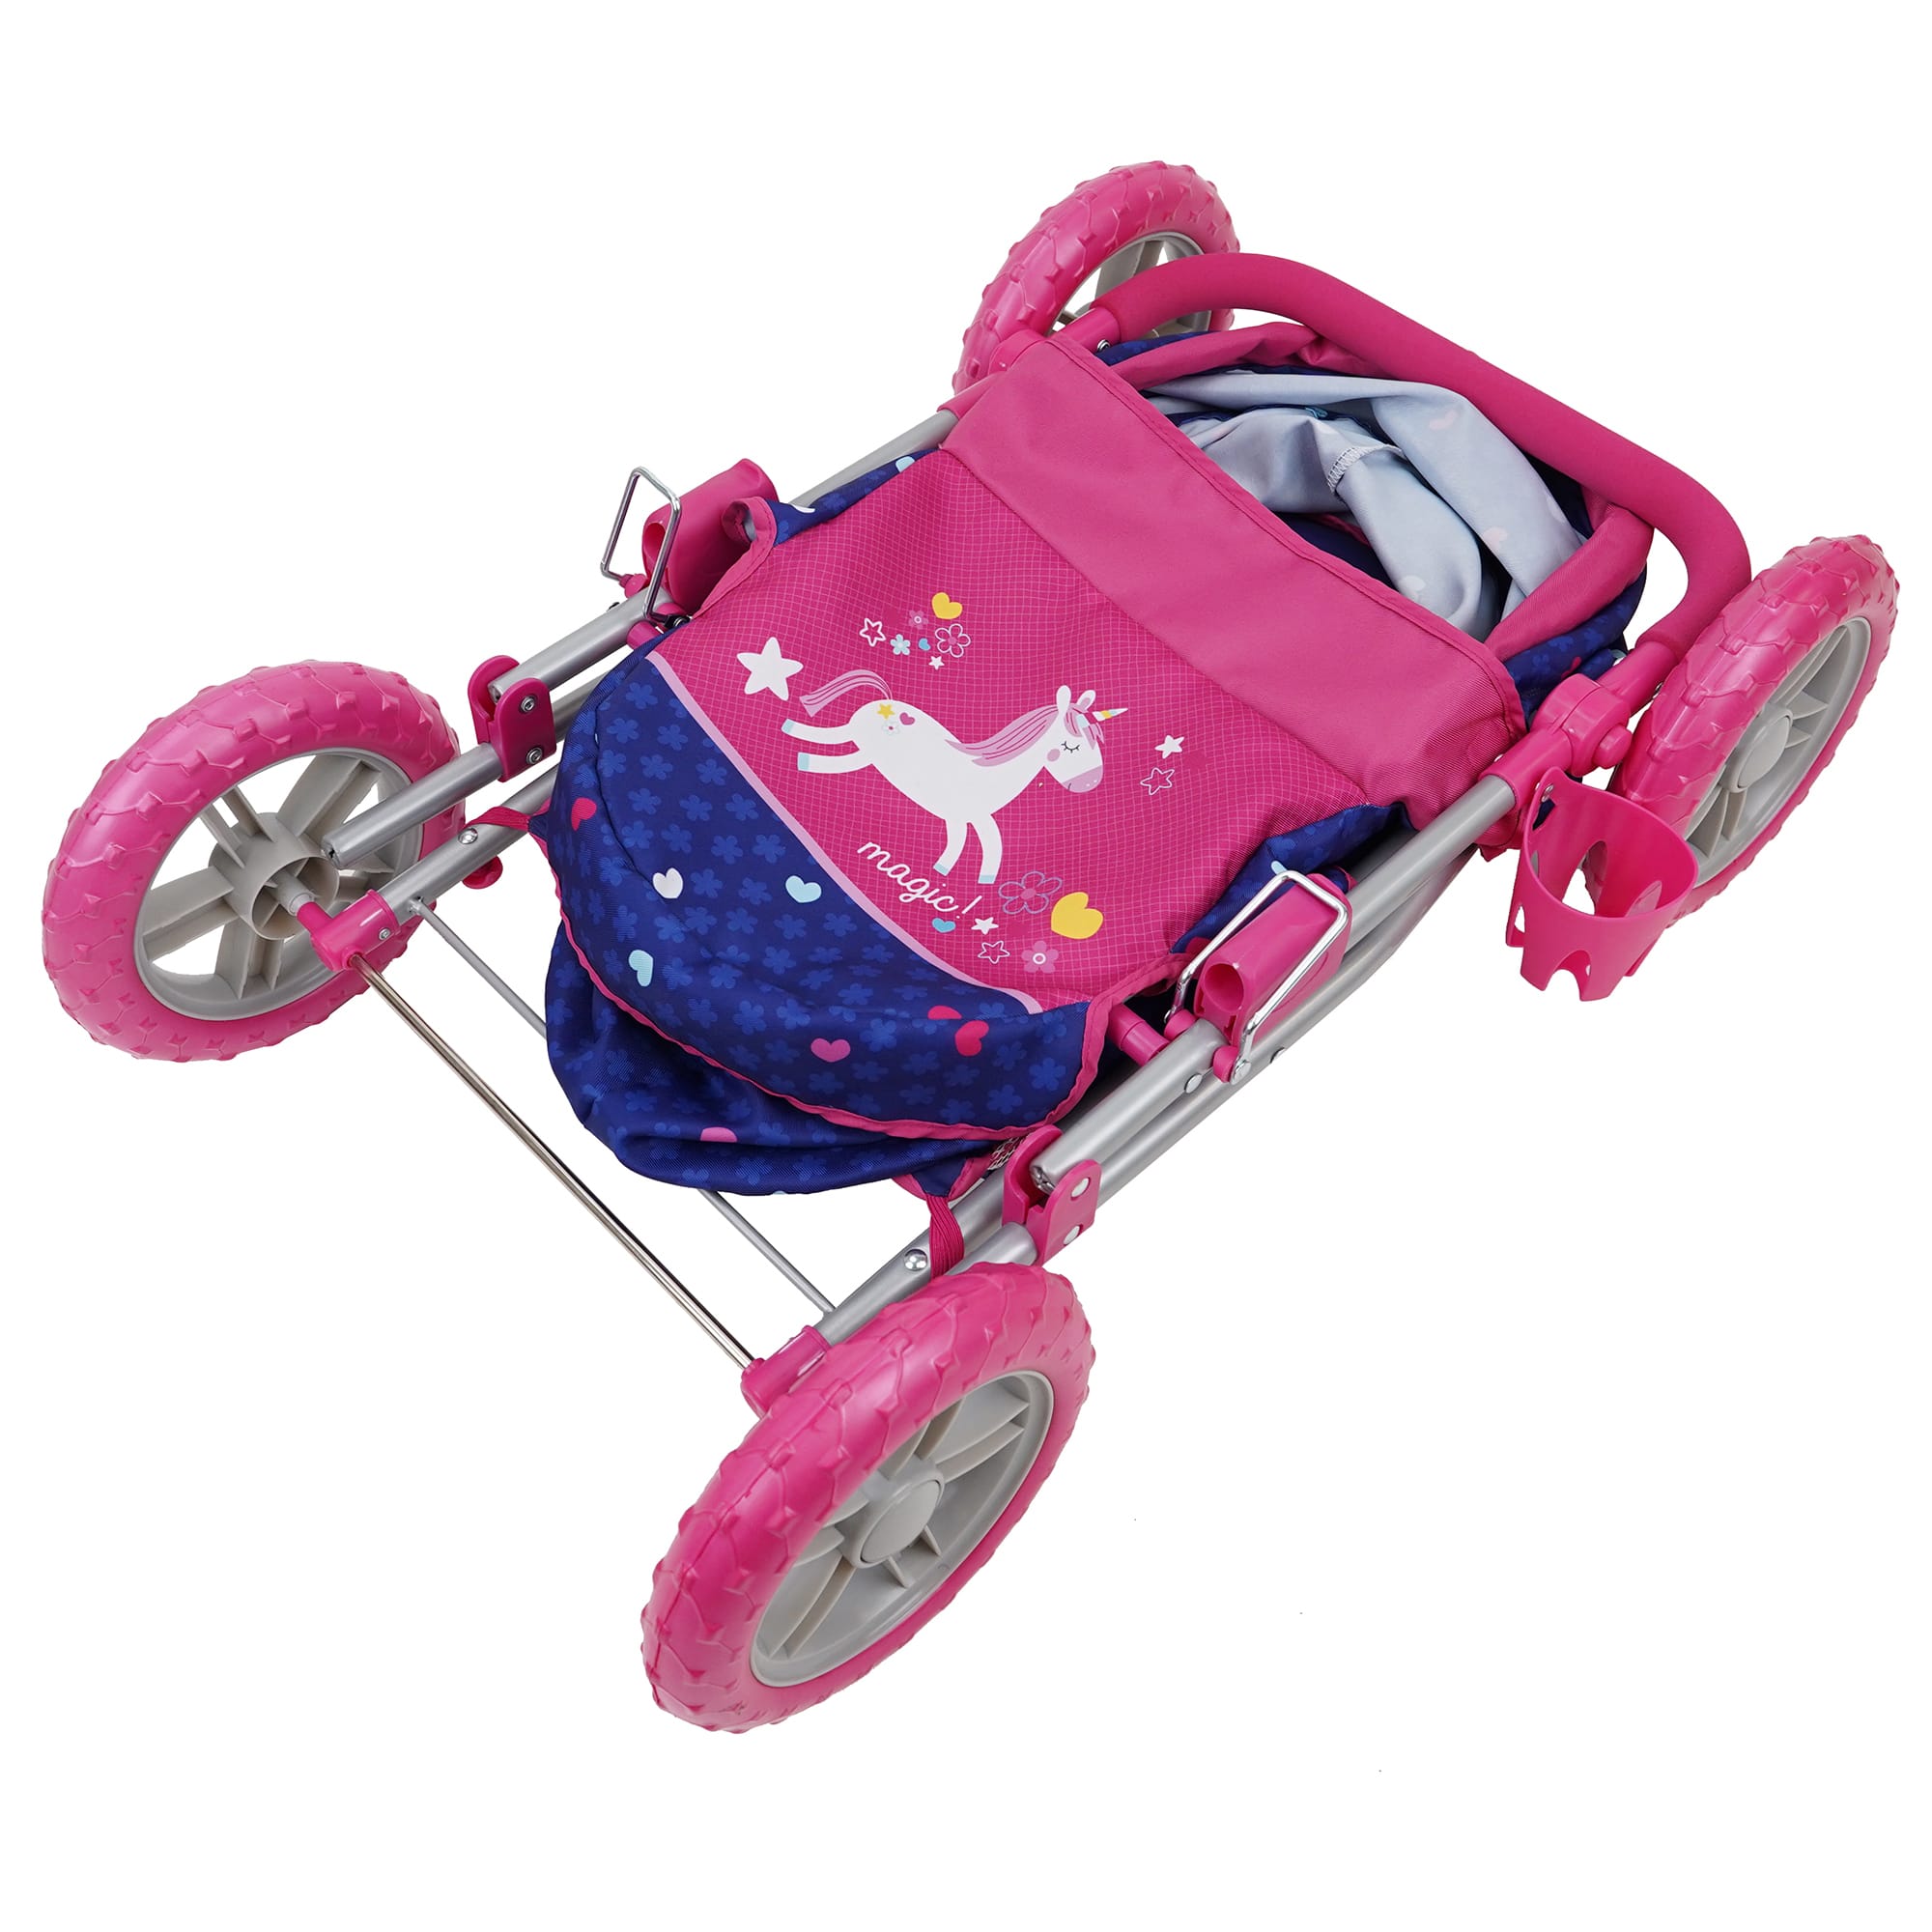 509 Crew Unicorn Doll Pram with Large Wheels